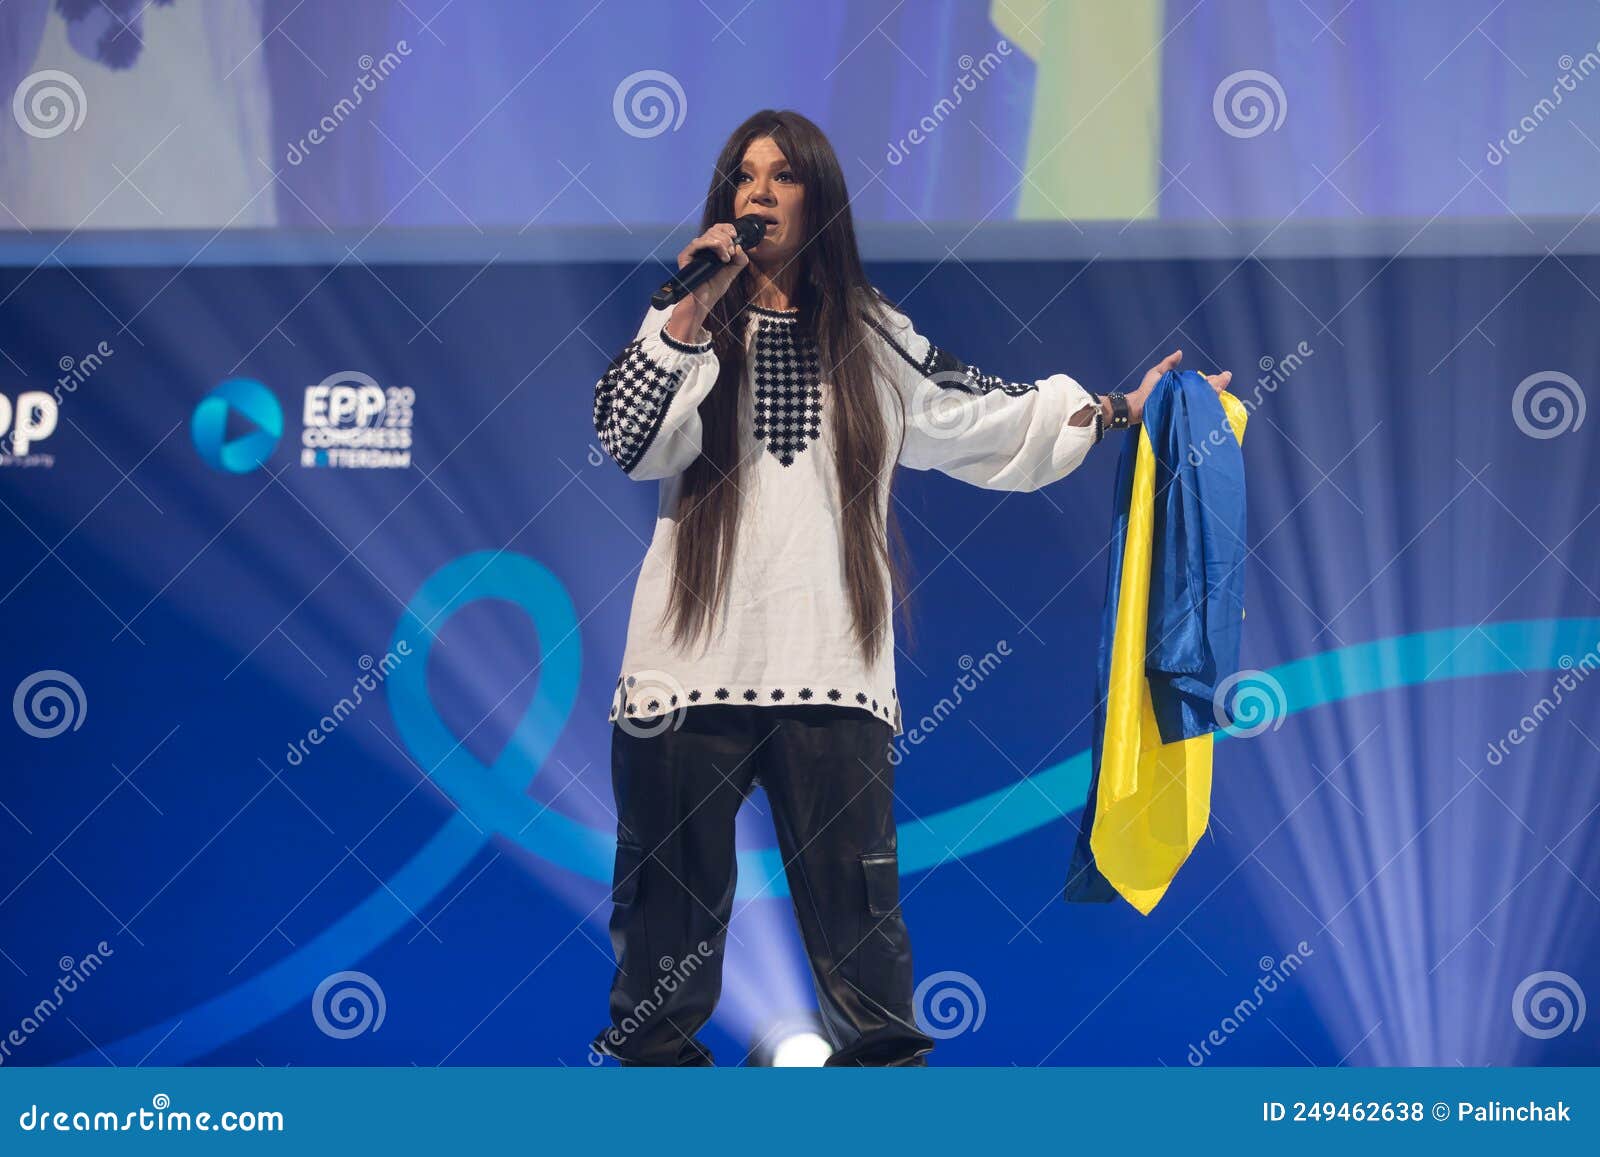 Singer Ruslana At Epp Congress Editorial Stock Photo Image Of Artist